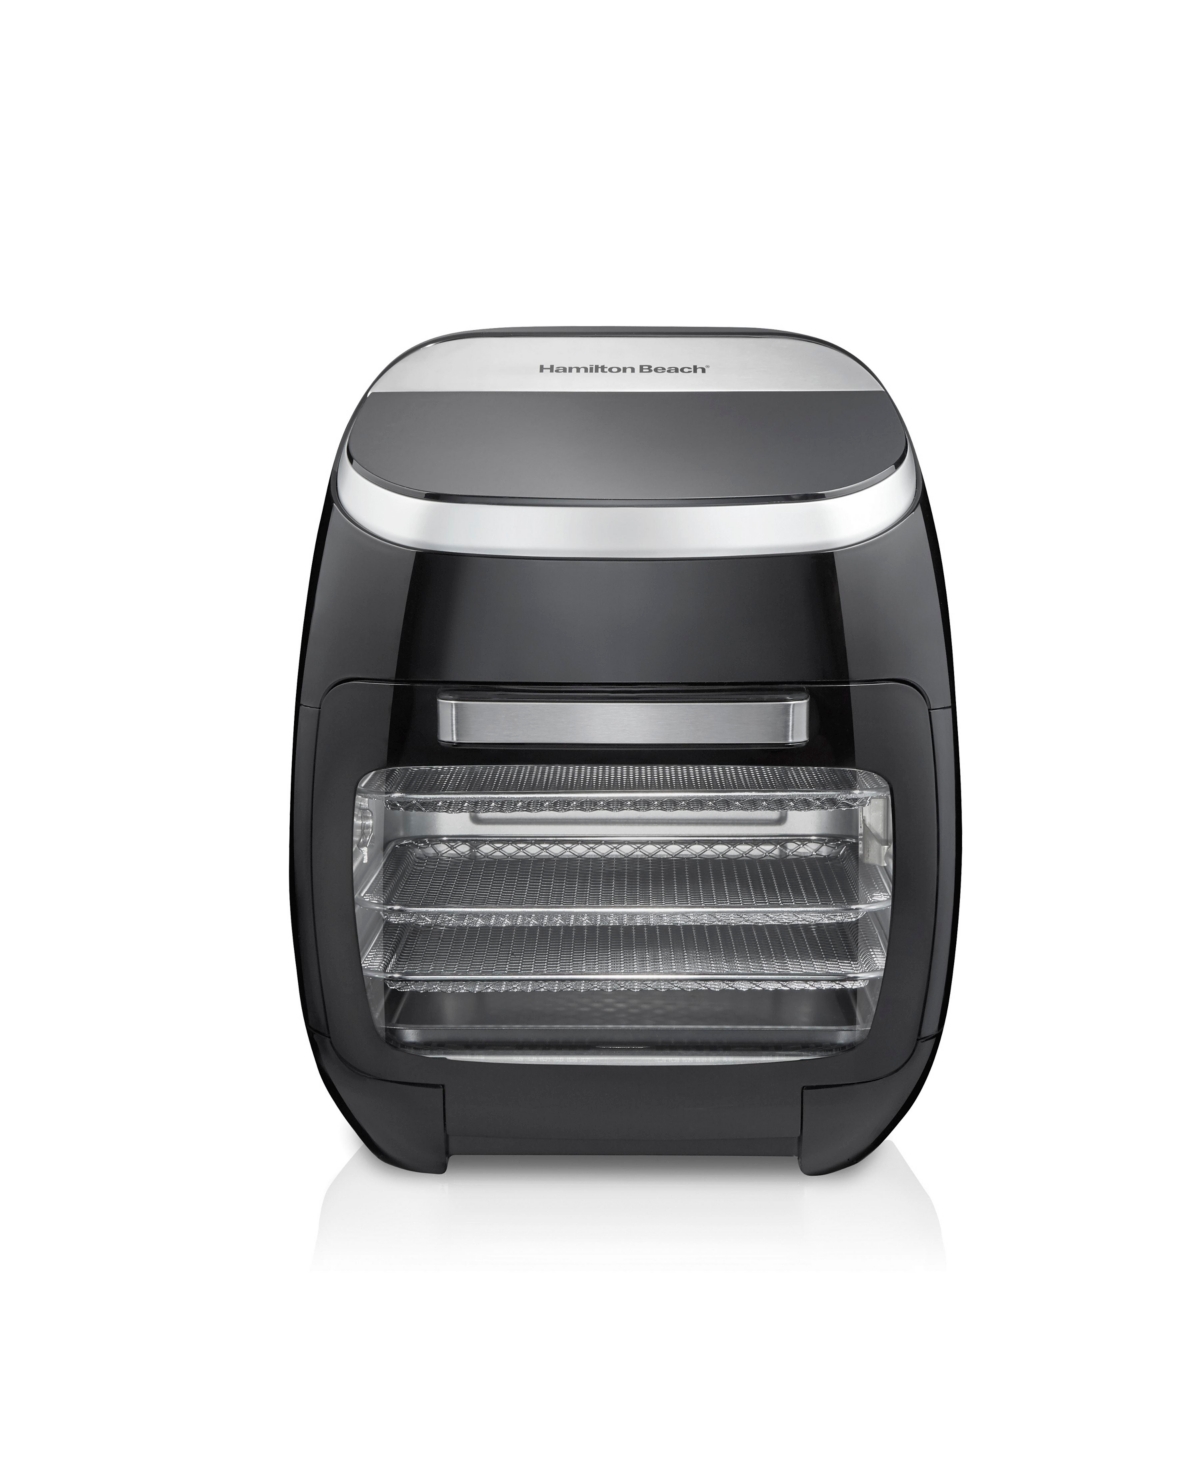 Hamilton Beach Digital Air Fryer Oven With Rotisserie In Black